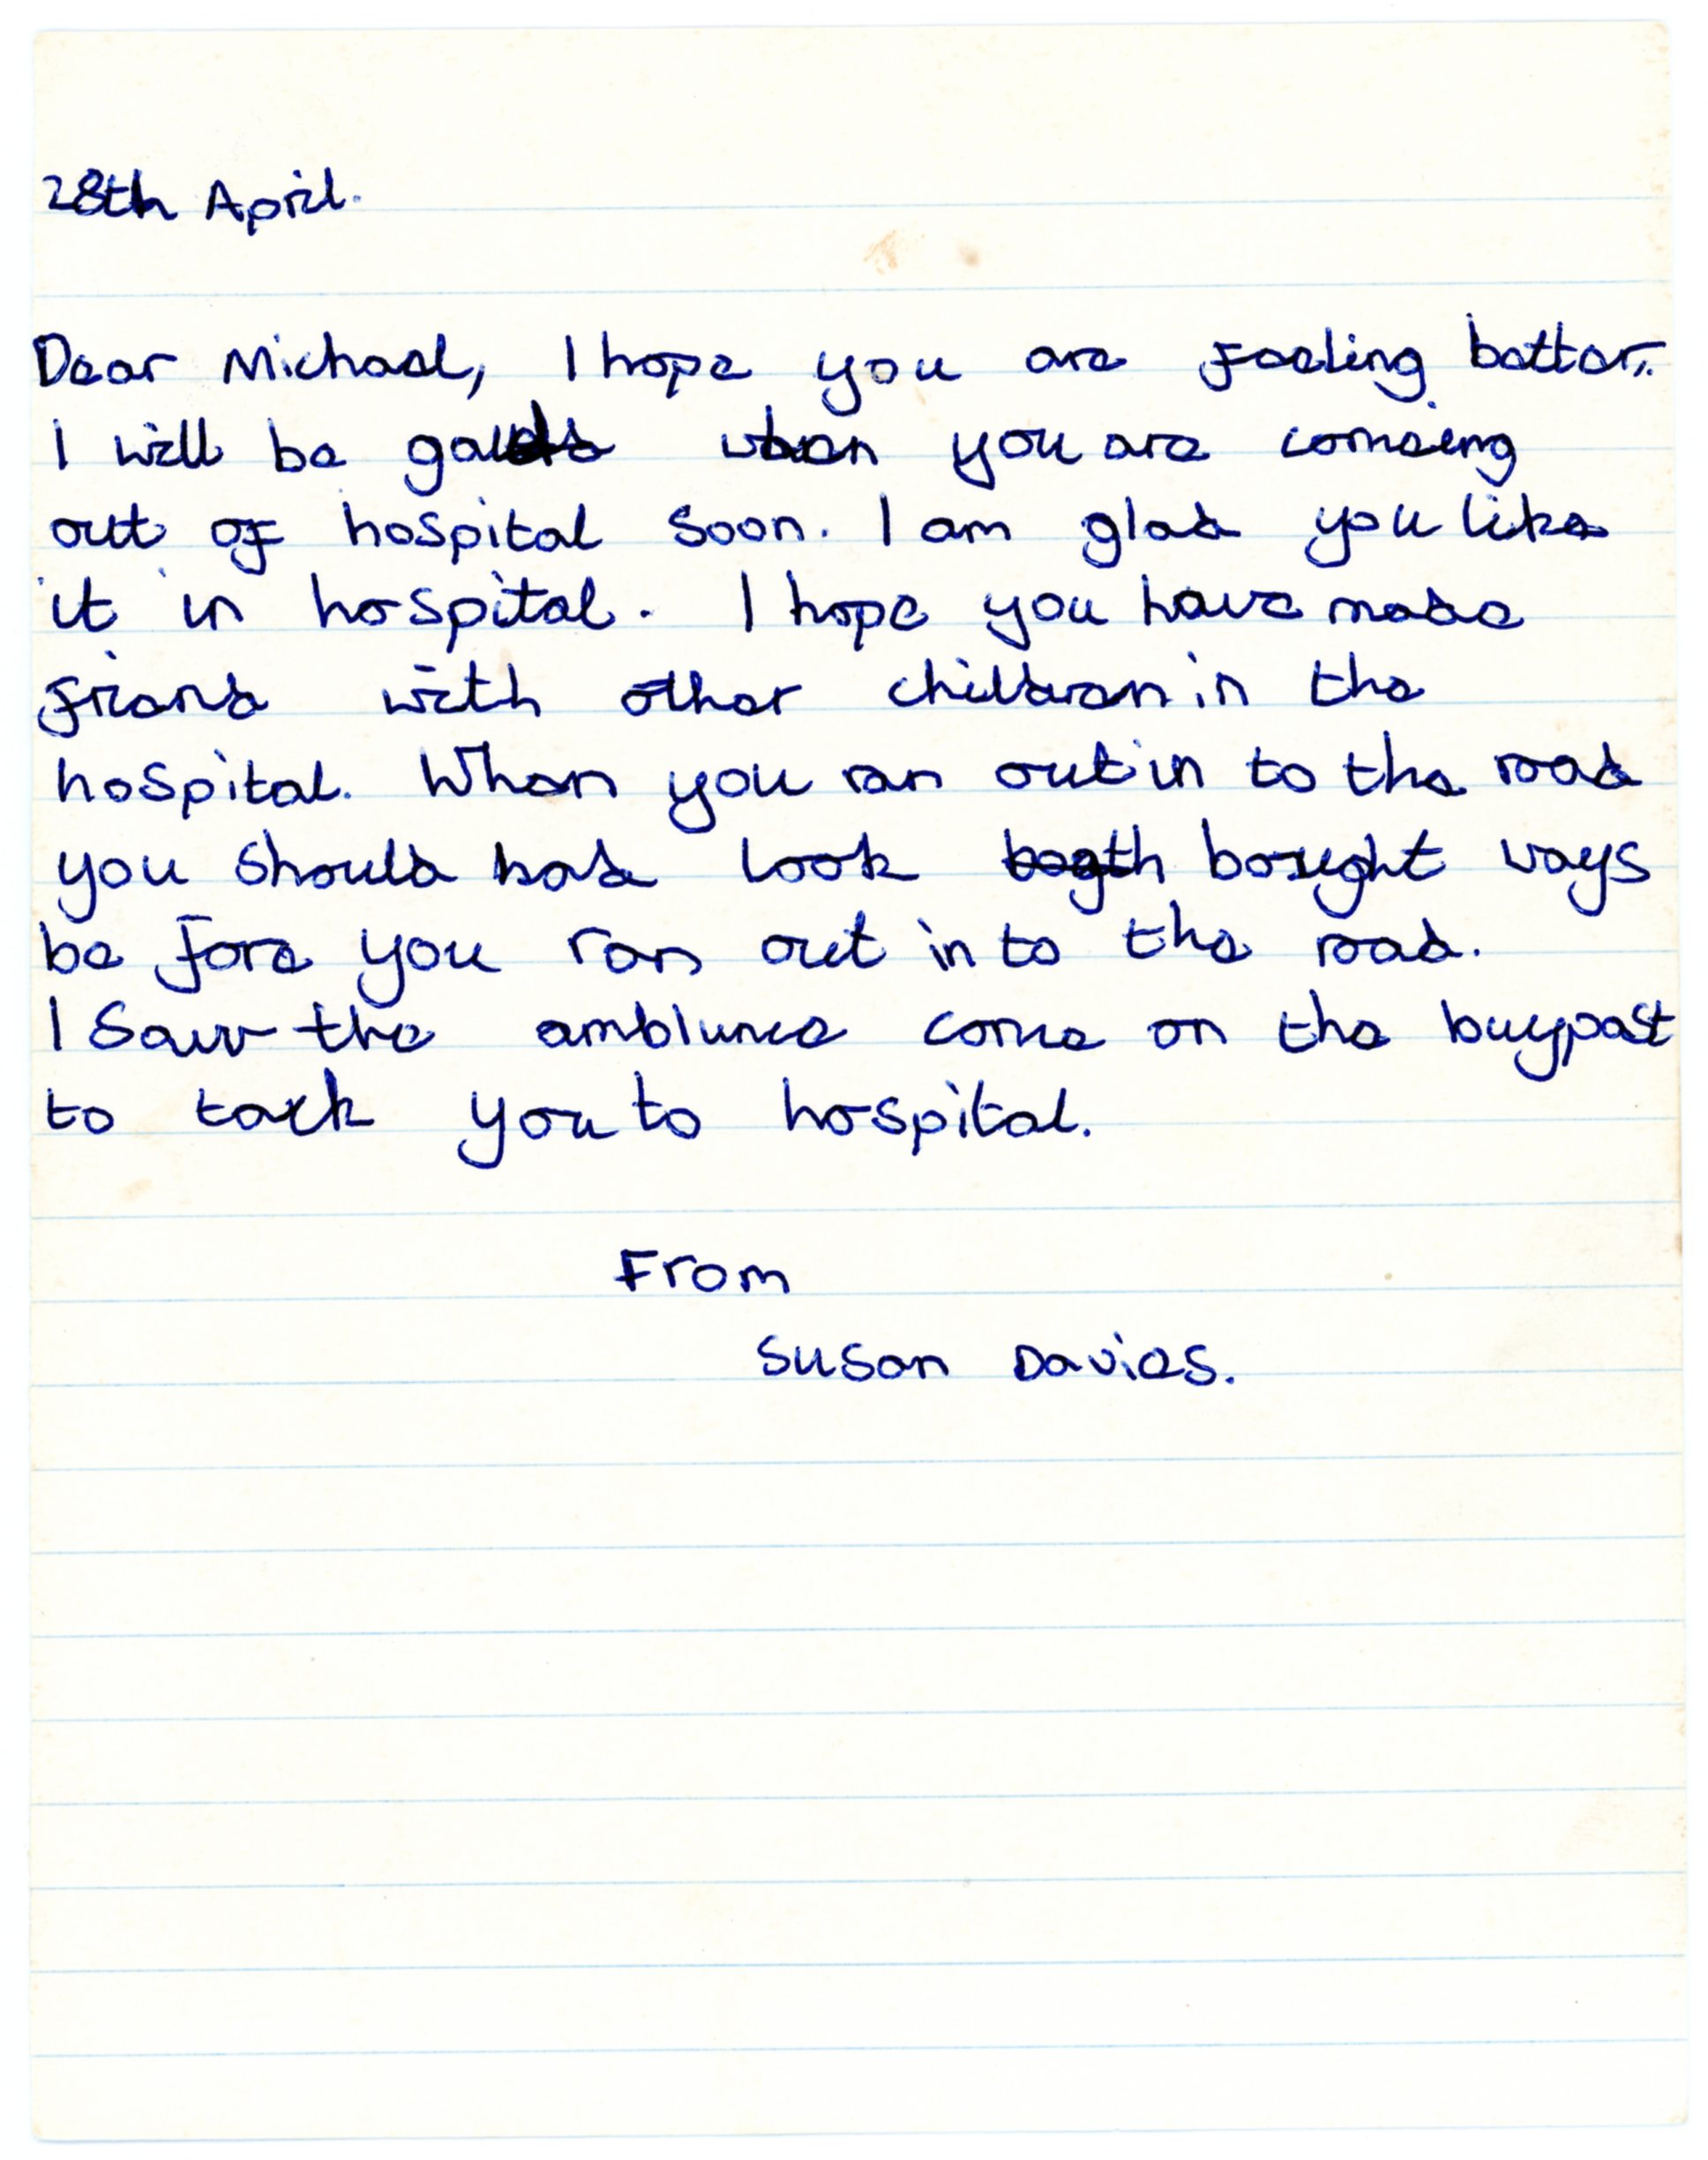 Susan Davies's original letter